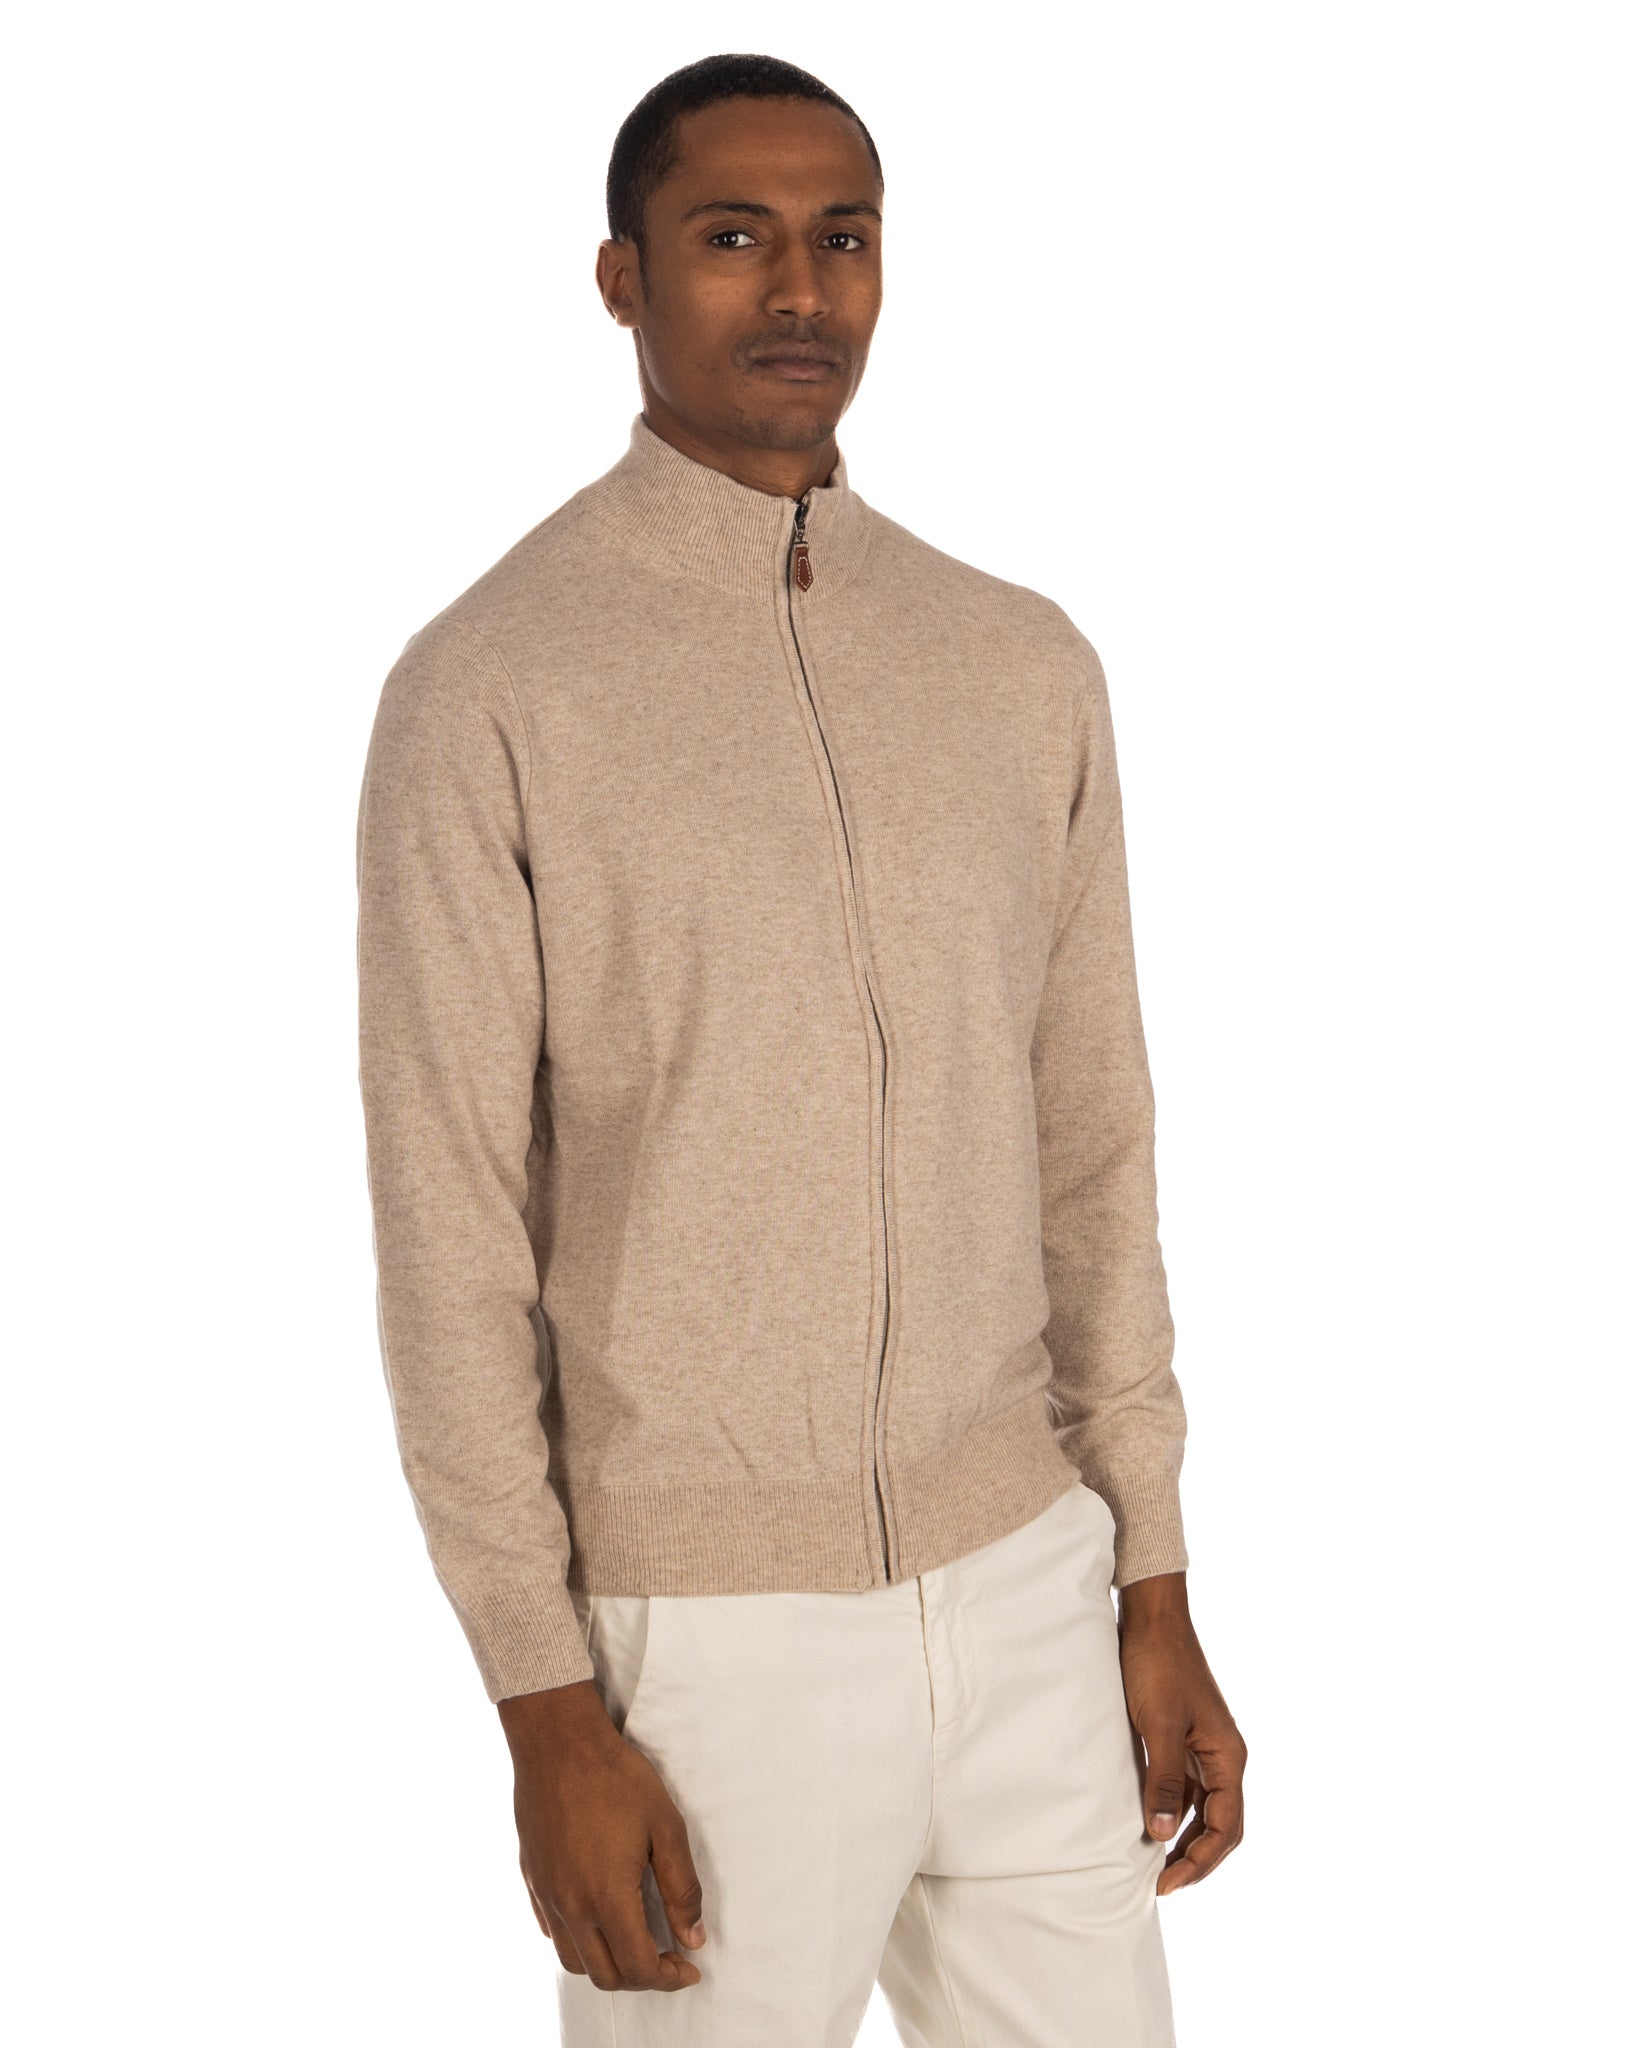 Matt - beige full zip sweater in cashmere blend